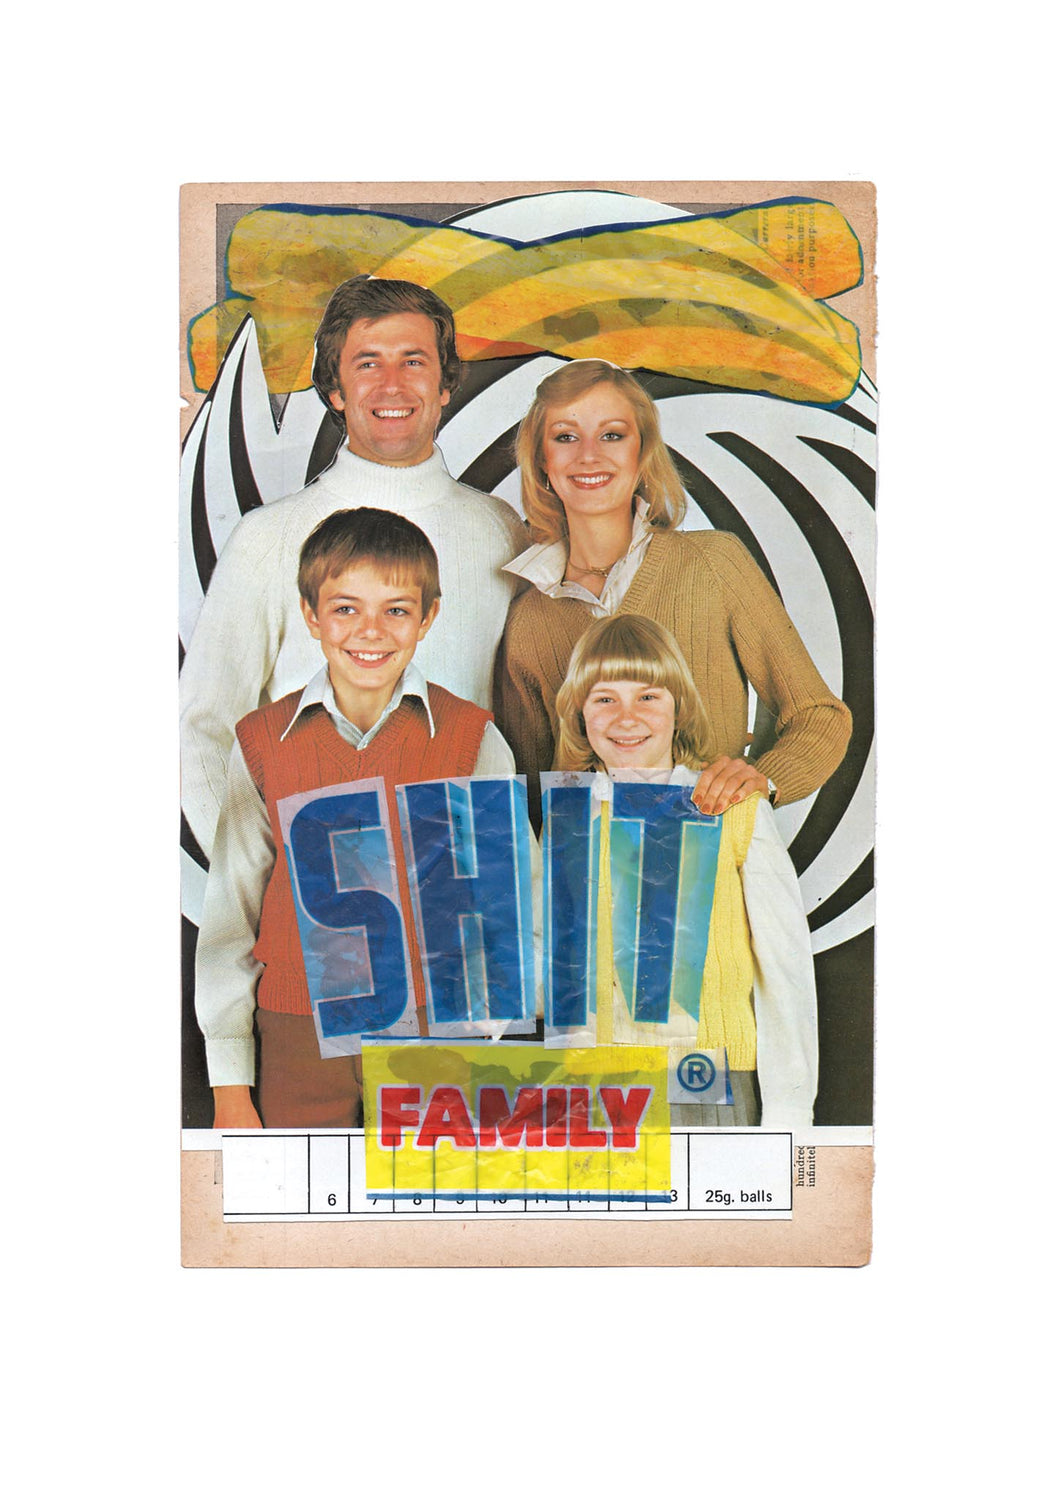 11: Shit Family